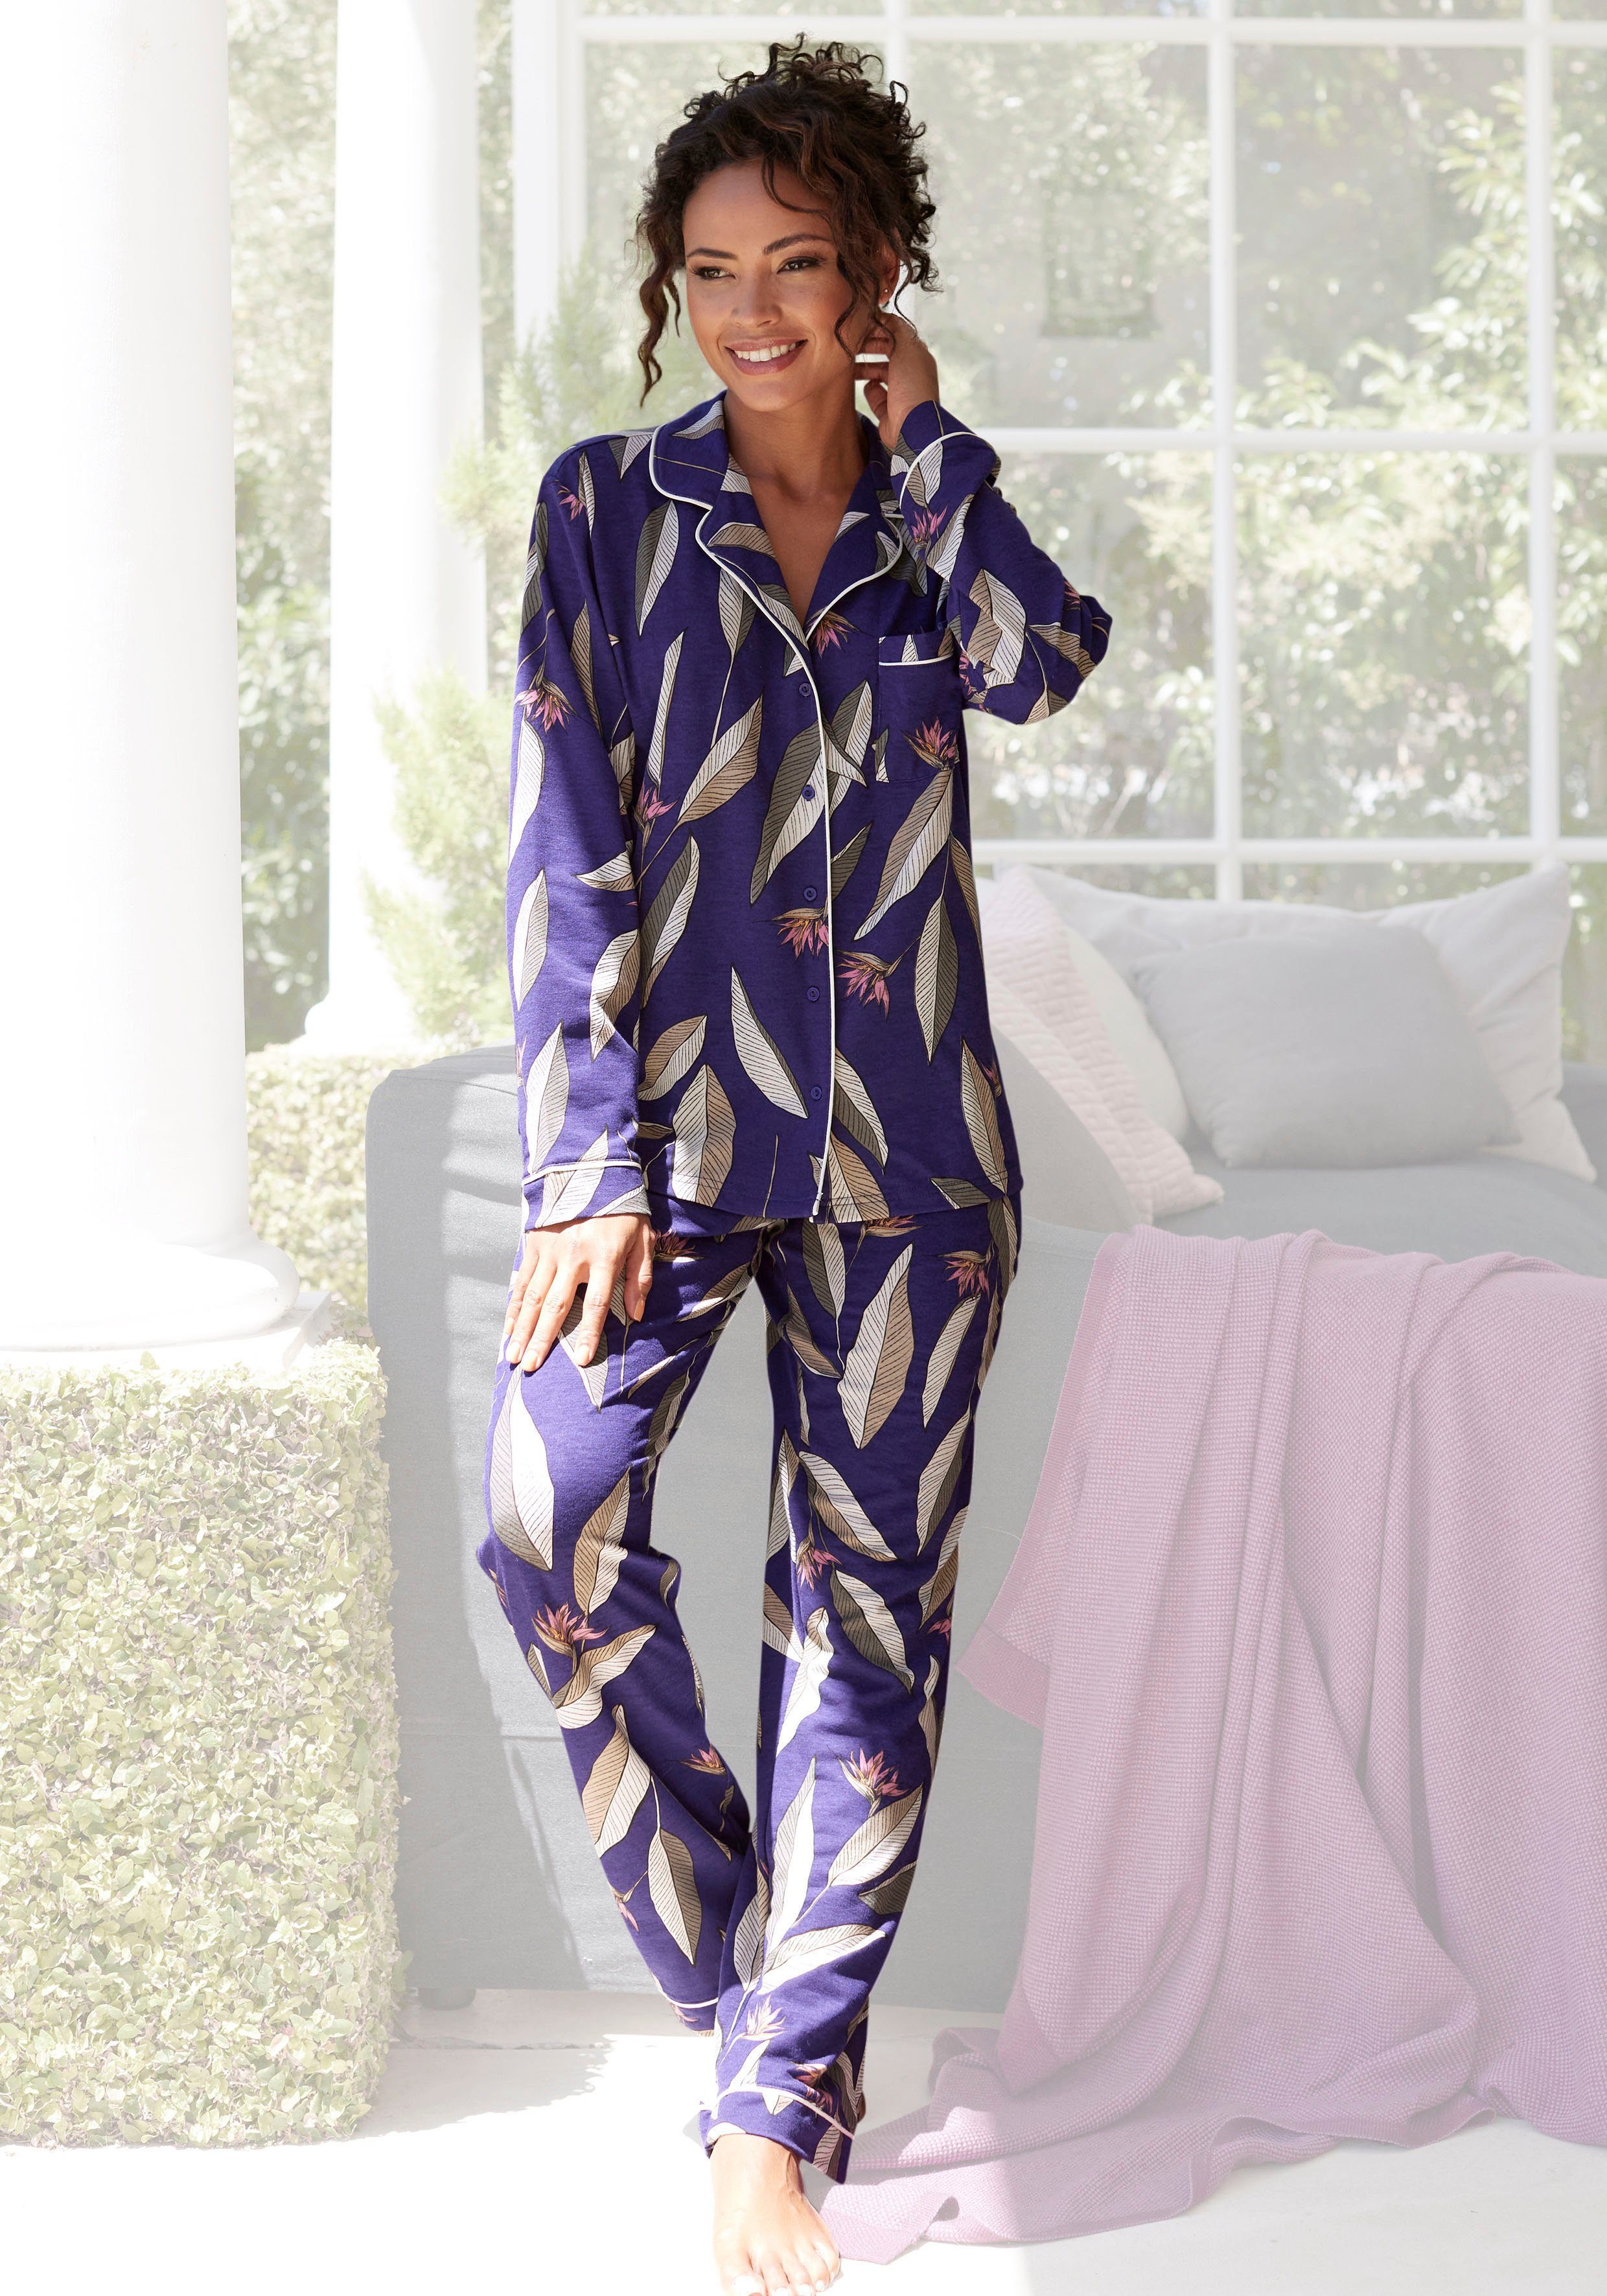 LASCANA Pyjama (2 tlg) im Schnitt klassischen dunkellila-gemustert